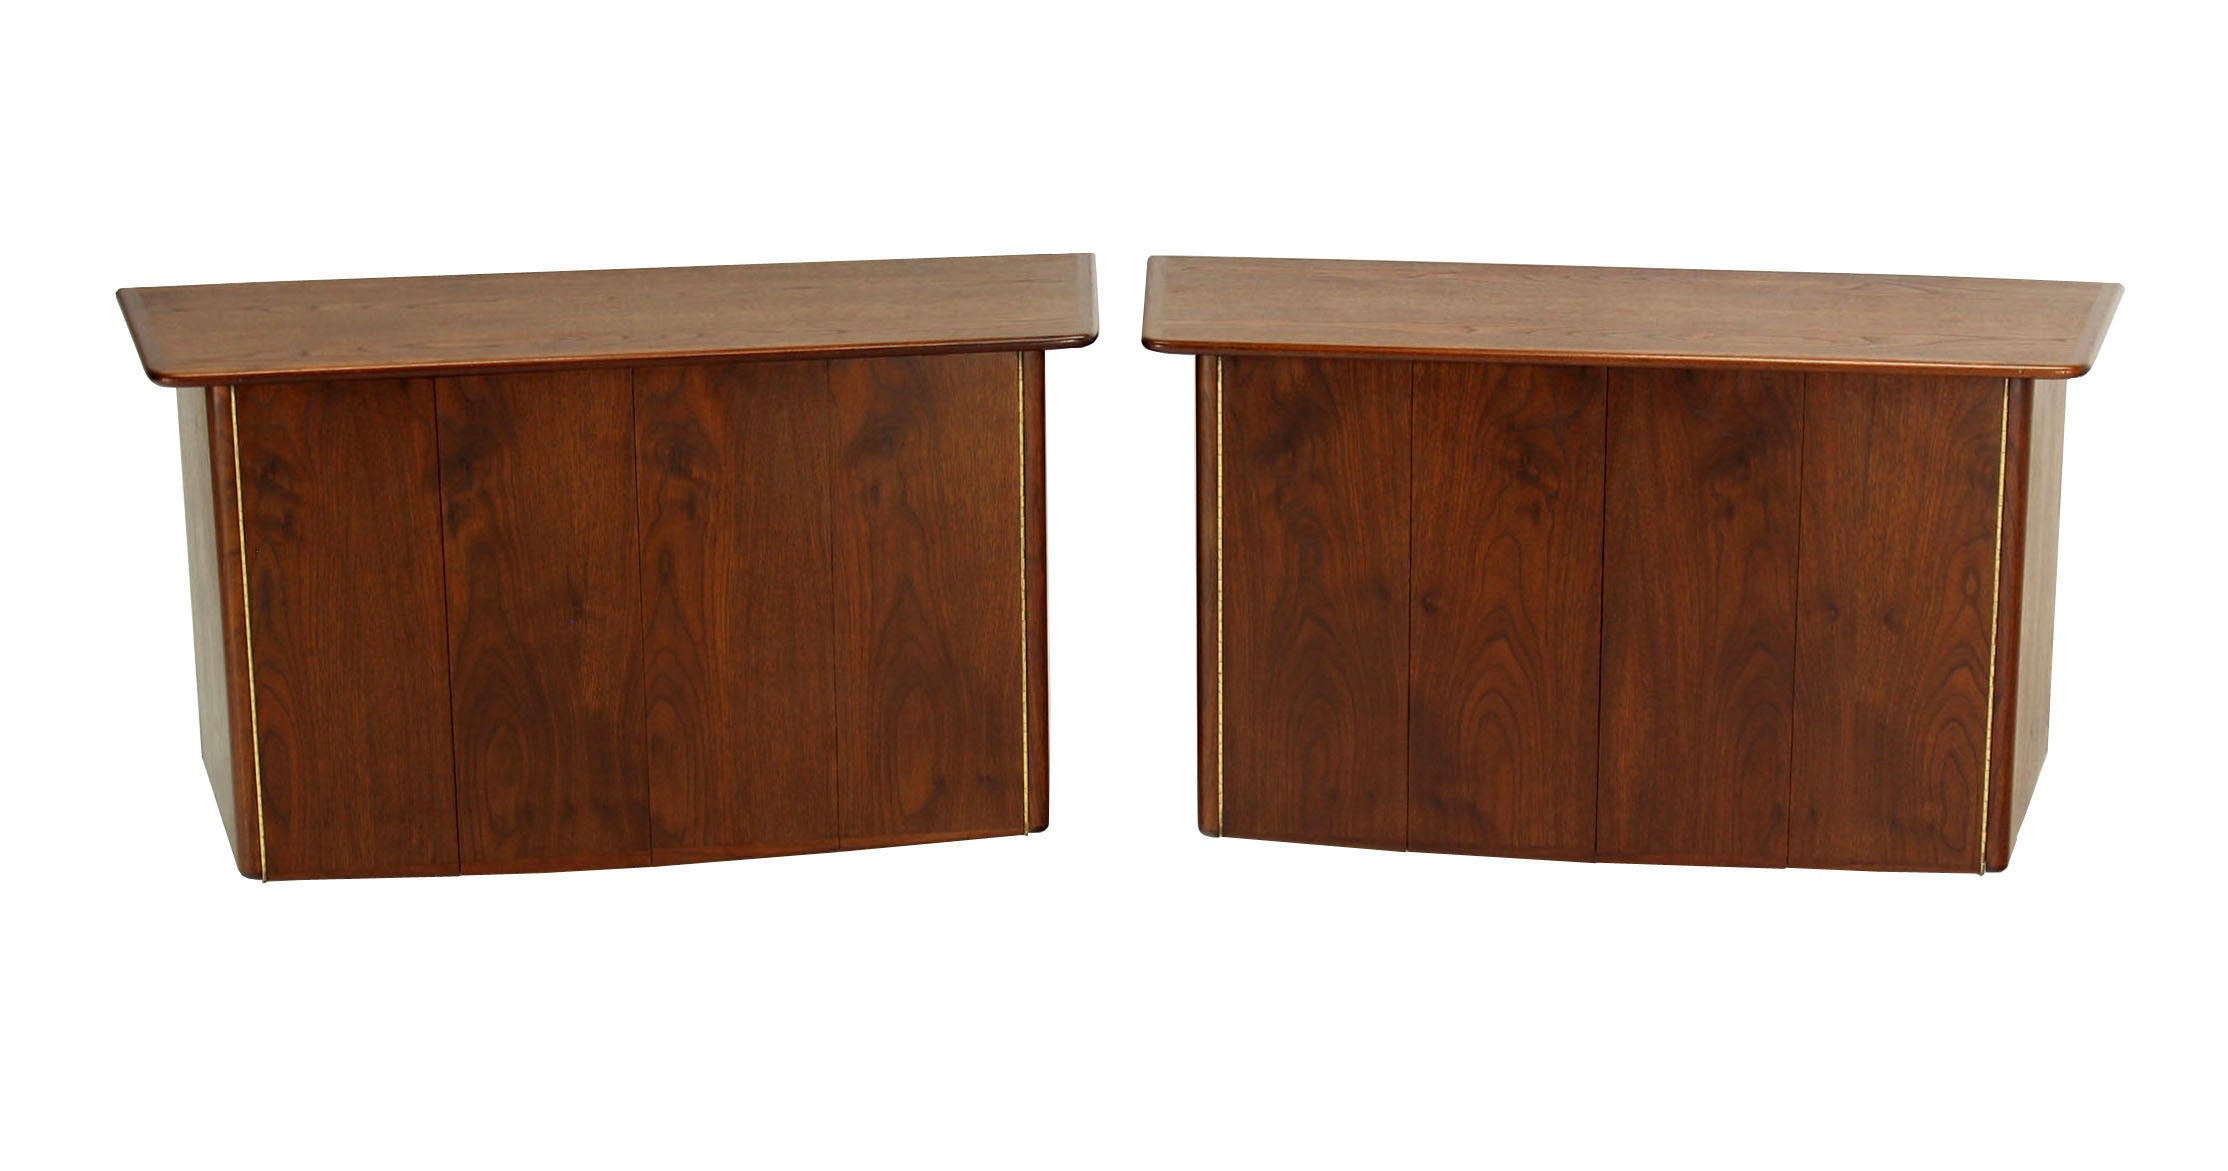 Pair of HANGING Walnut  Mid-Century Danish Modern  Floating Dressers Cabinets